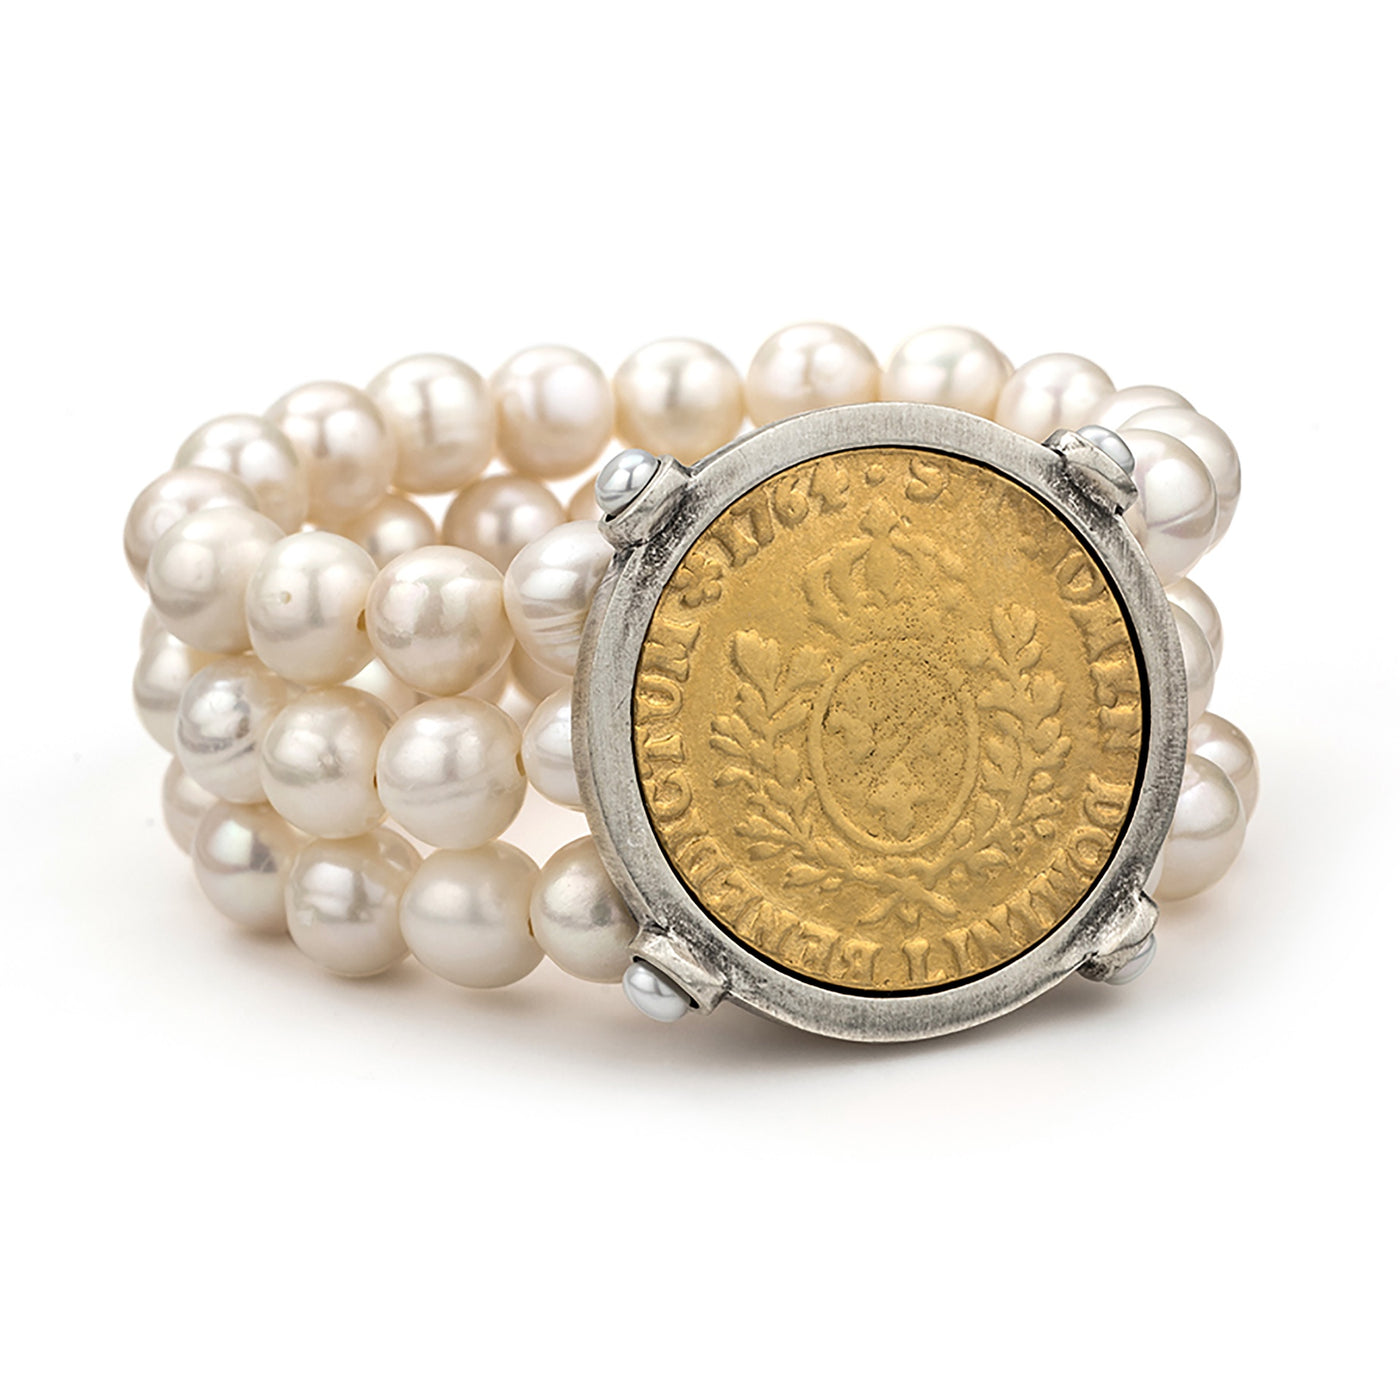 Triple-Strand Freshwater Pearl Bracelet with 24k Gold Plated Medallion